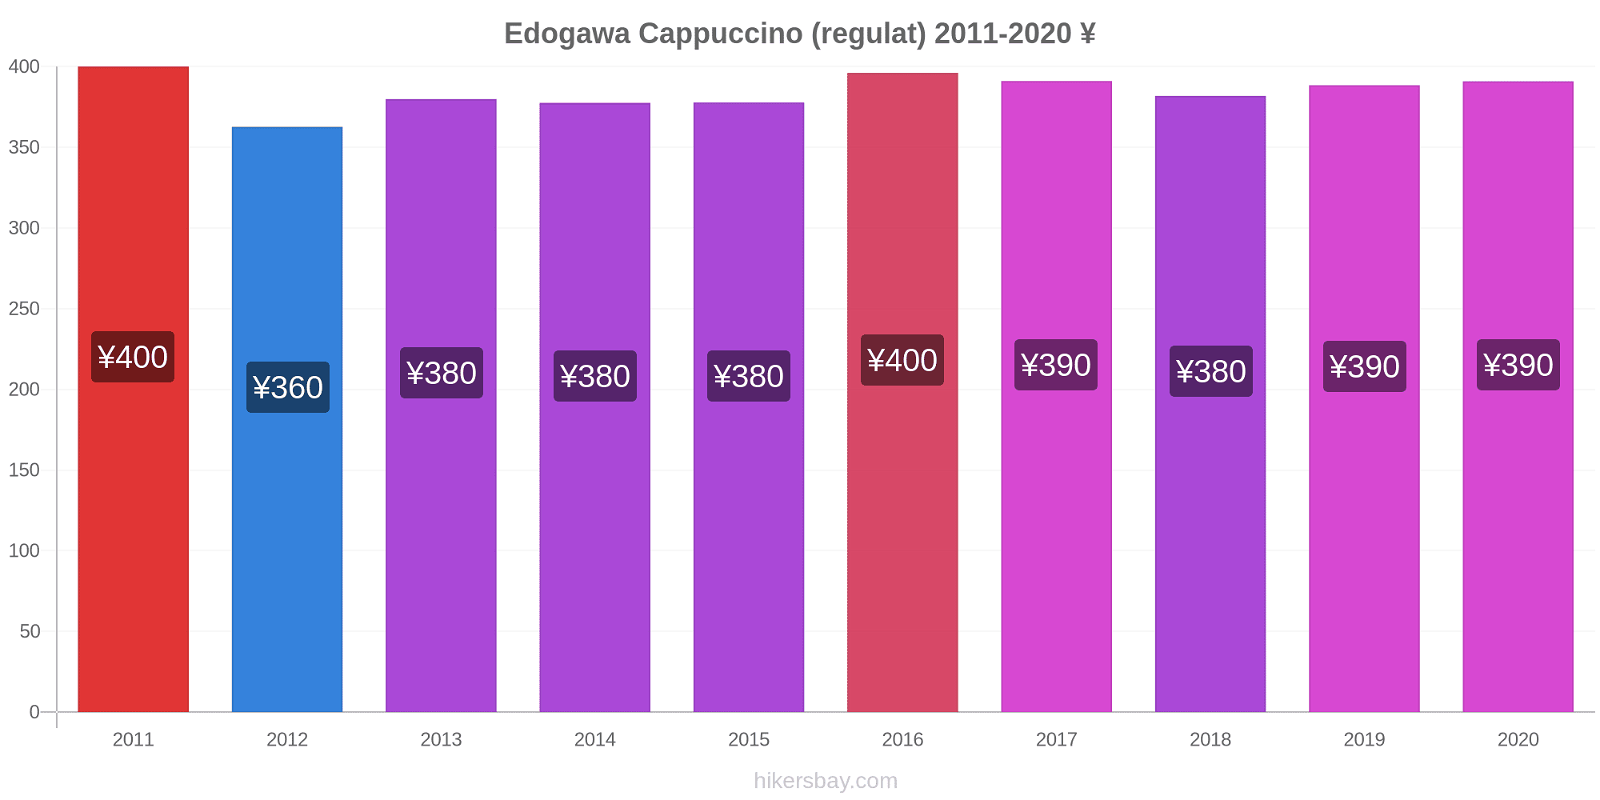 Edogawa modificări de preț Cappuccino (regulat) hikersbay.com